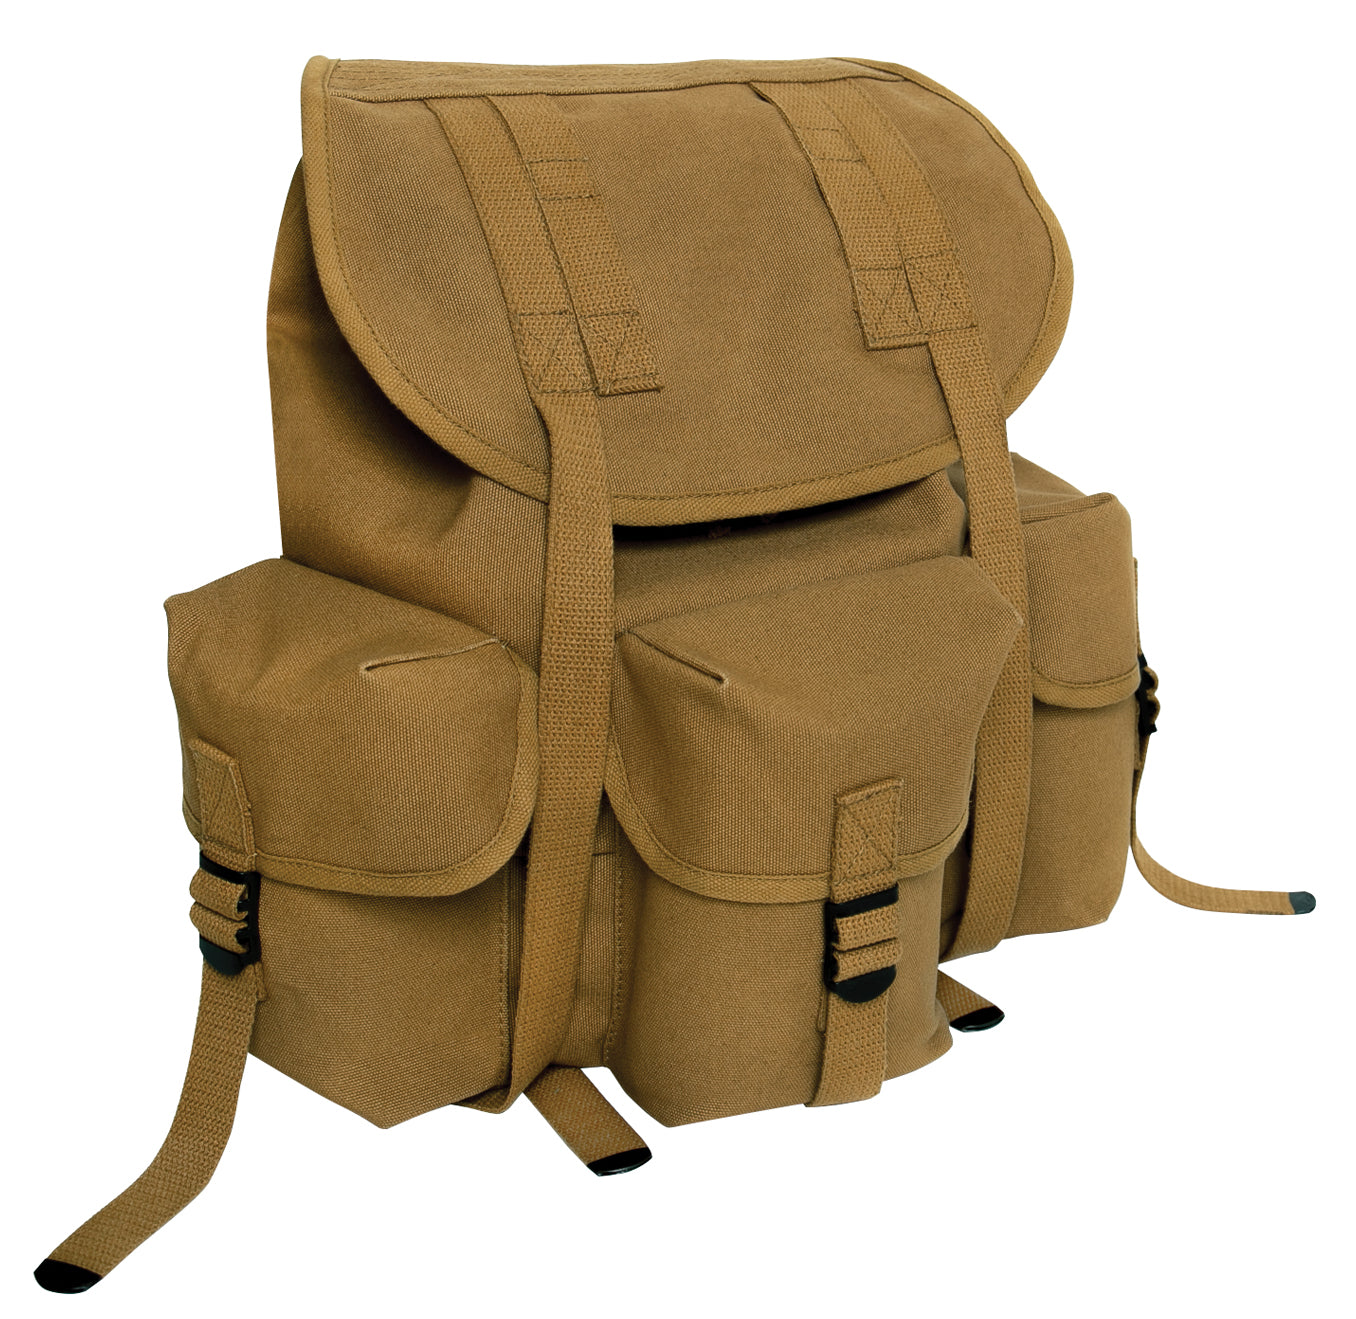 Milspec G.I. Type Heavyweight Mini Alice Pack Backpacks MilTac Tactical Military Outdoor Gear Australia